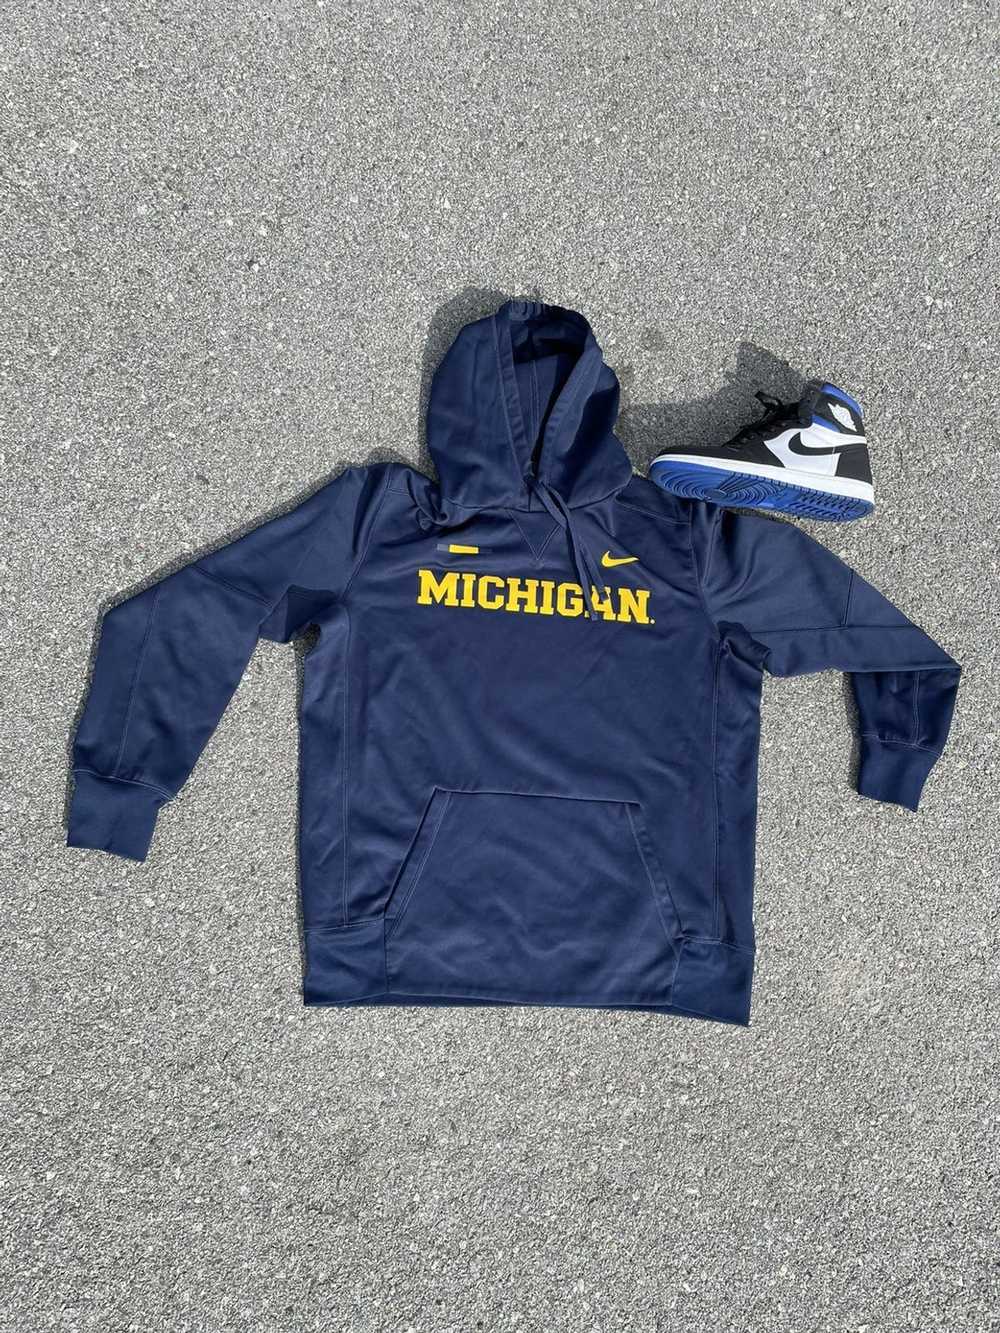 Nike Nike Michigan Hoodie - image 2